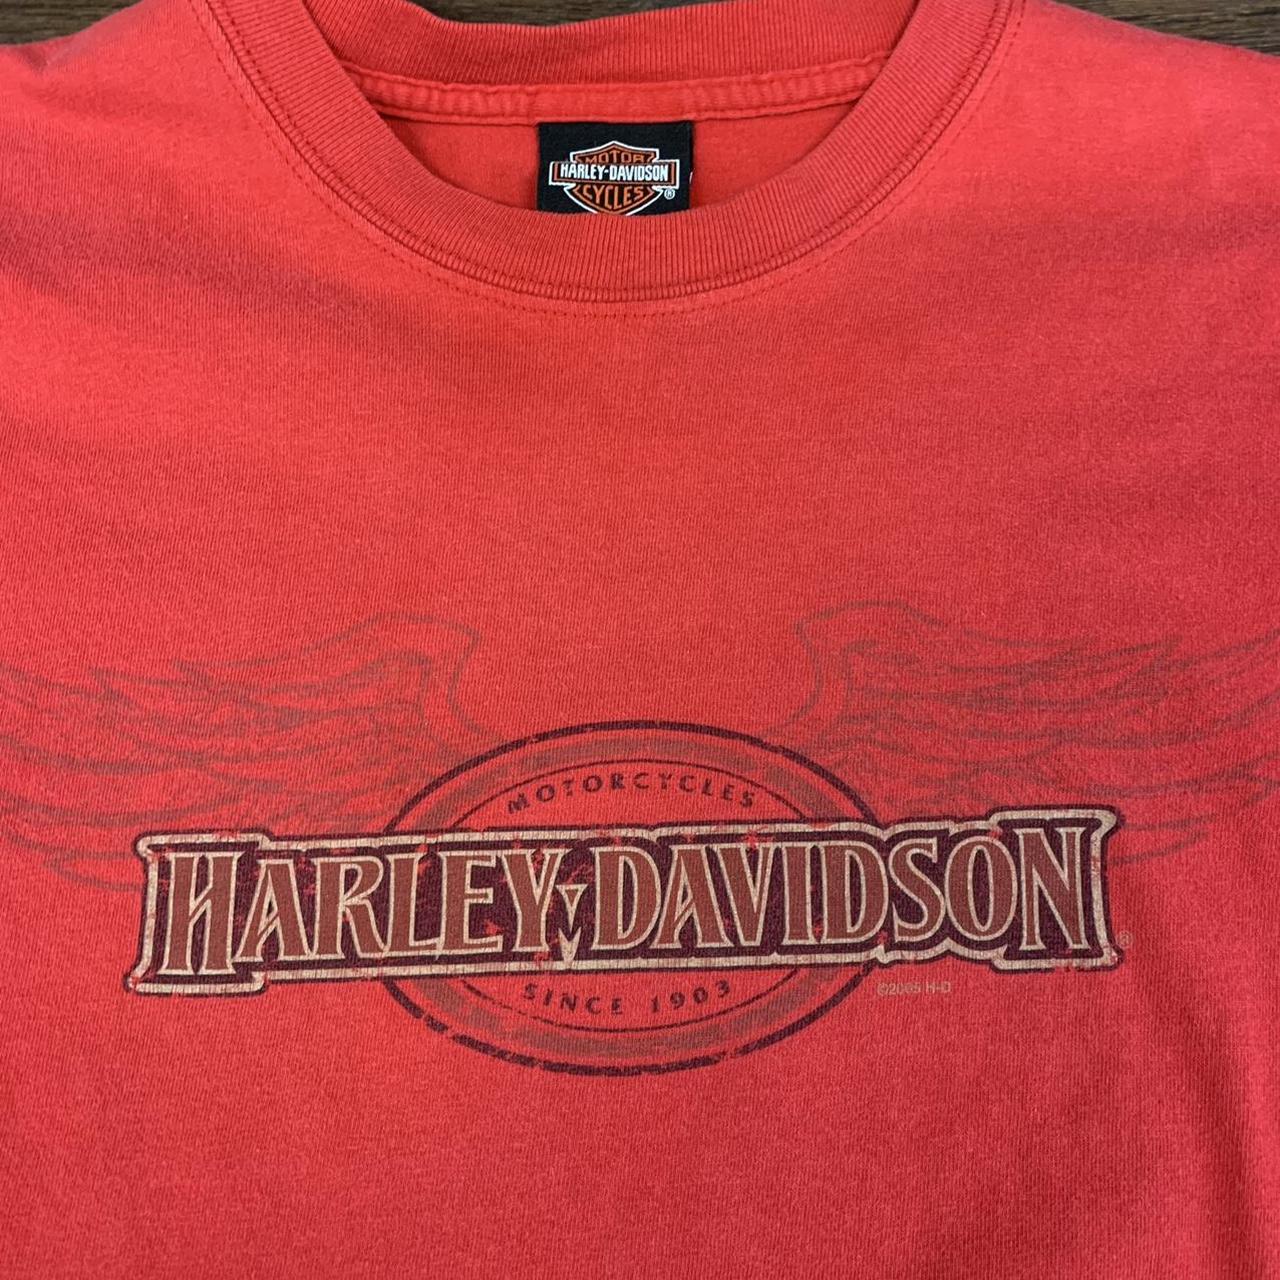 2005 Harley Davidson Vehicle Operations T-Shirt Red... - Depop